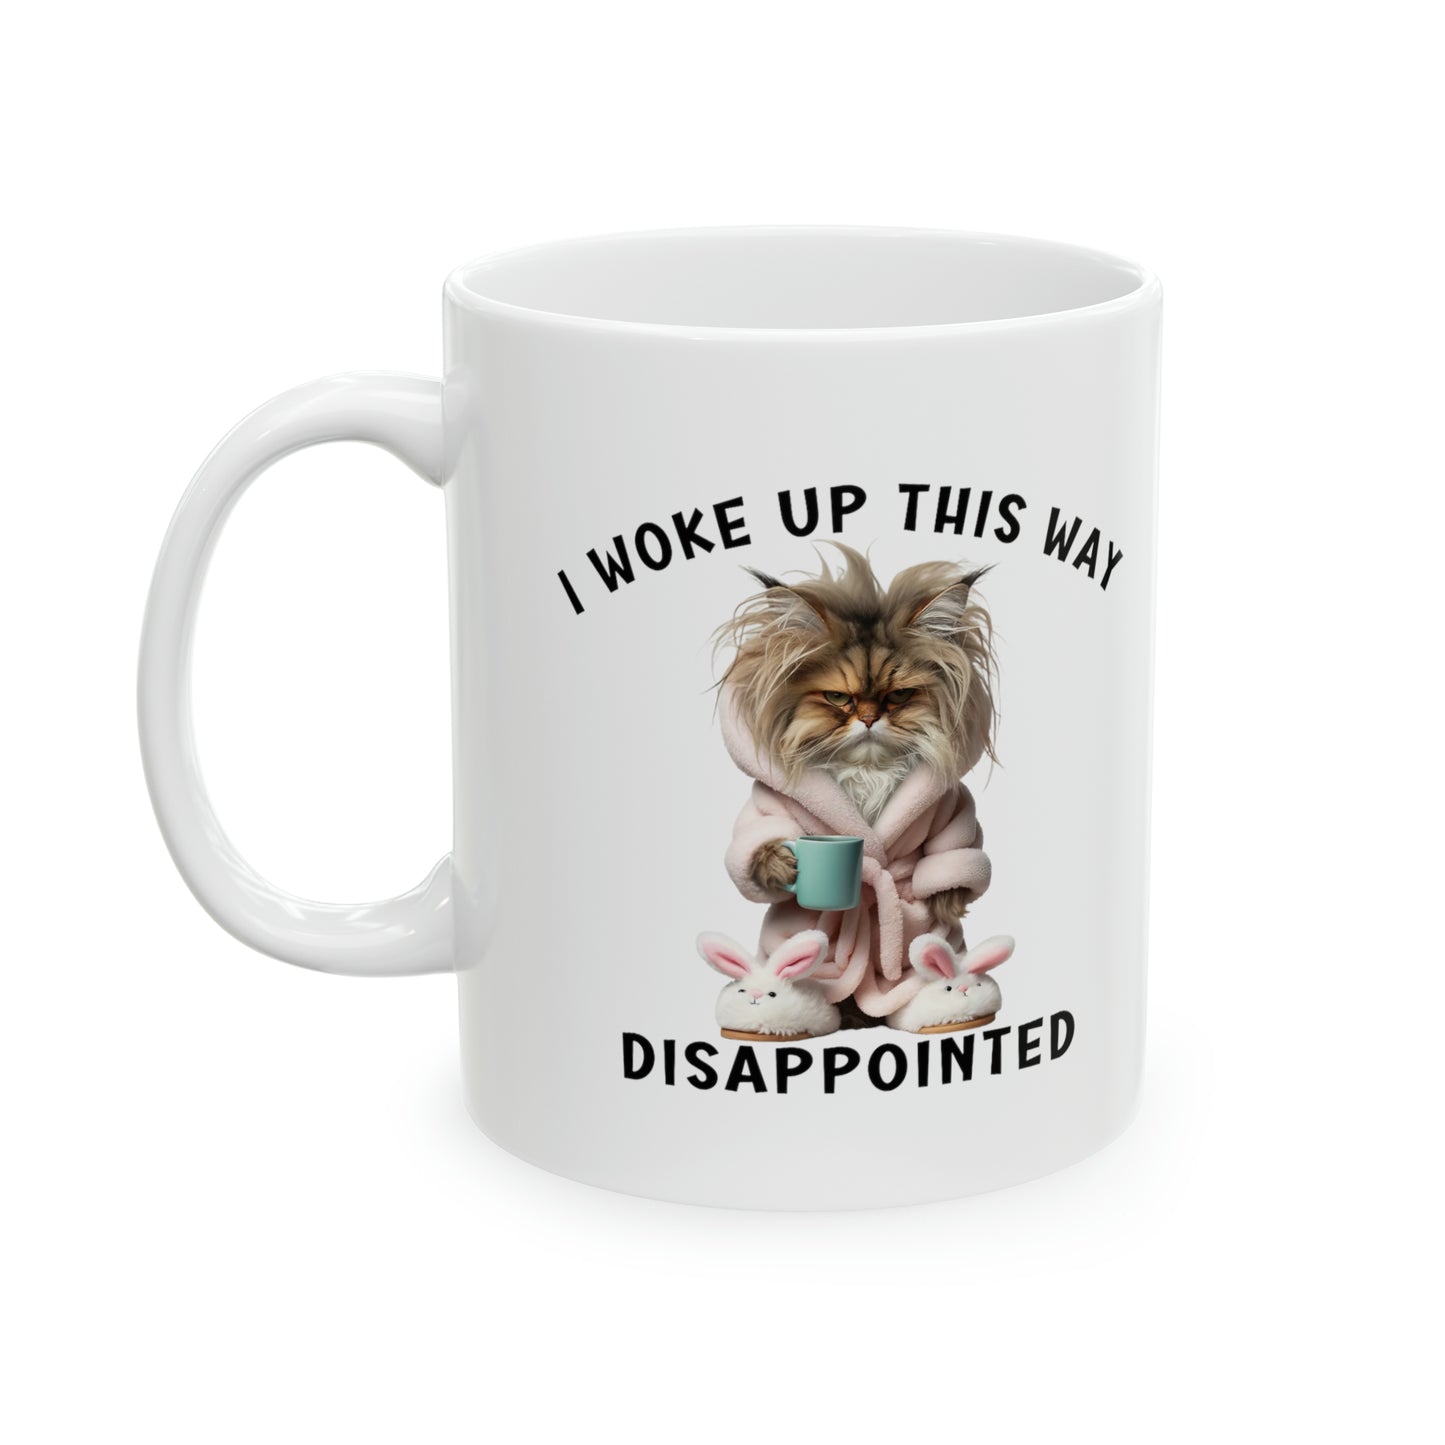 Funny Cat Coffee Mug, I Woke Up This Way Disappointed, Grumpy Cat with Coffee Mug, Unique Graphic Mug, Funny Coffee Cup Gift, Ceramic Mug, 11oz